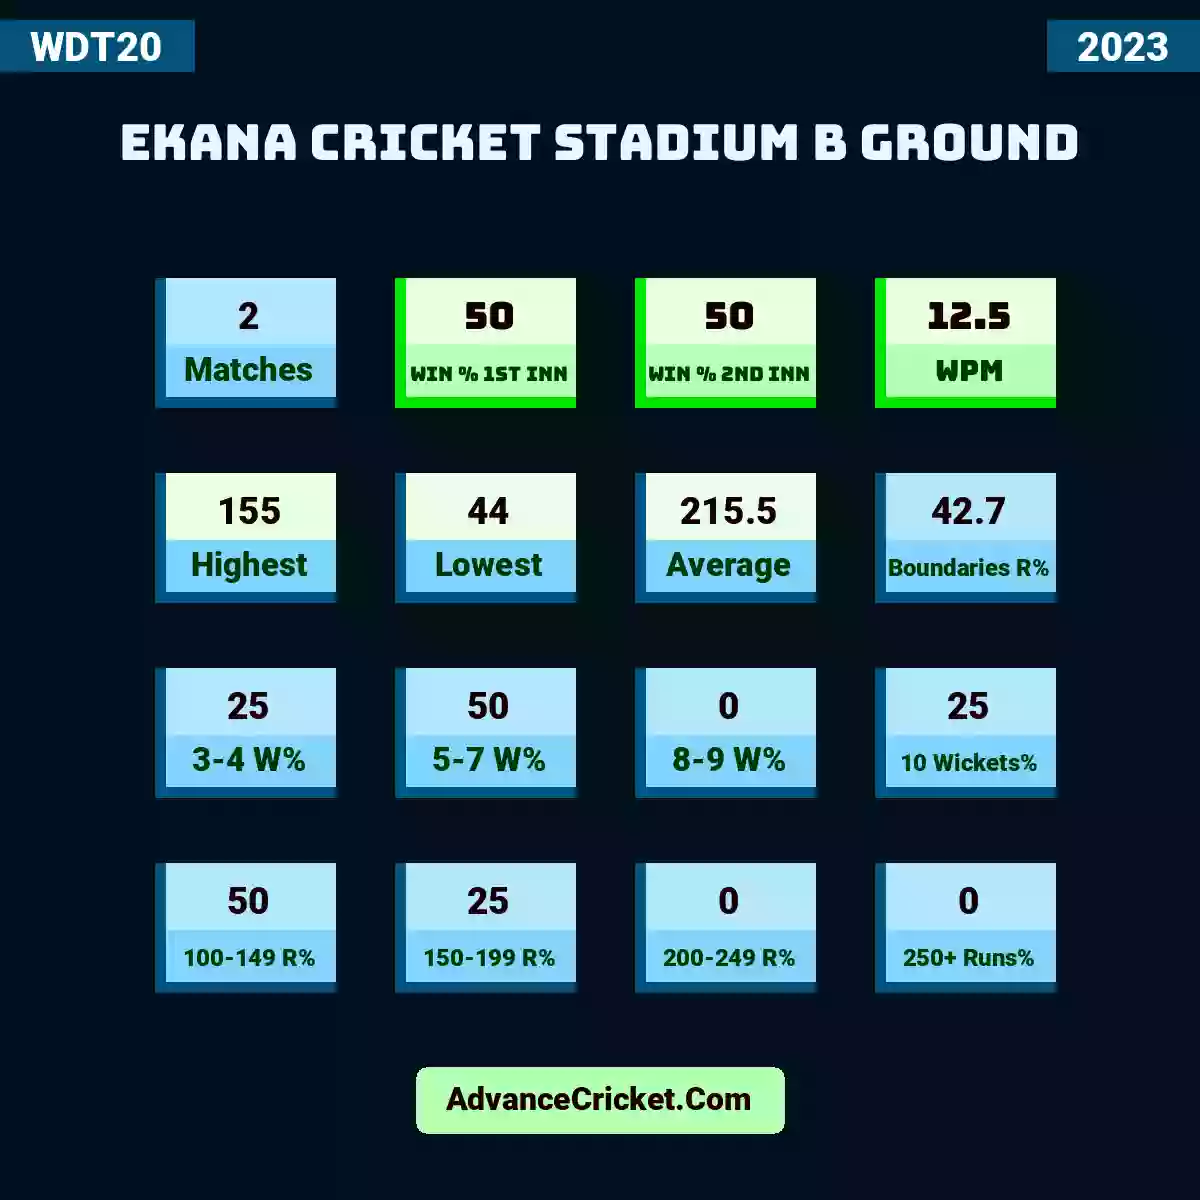 Image showing Ekana Cricket Stadium B ground with Matches: 2, Win % 1st Inn: 50, Win % 2nd Inn: 50, WPM: 12.5, Highest: 155, Lowest: 44, Average: 215.5, Boundaries R%: 42.7, 3-4 W%: 25, 5-7 W%: 50, 8-9 W%: 0, 10 Wickets%: 25, 100-149 R%: 50, 150-199 R%: 25, 200-249 R%: 0, 250+ Runs%: 0.